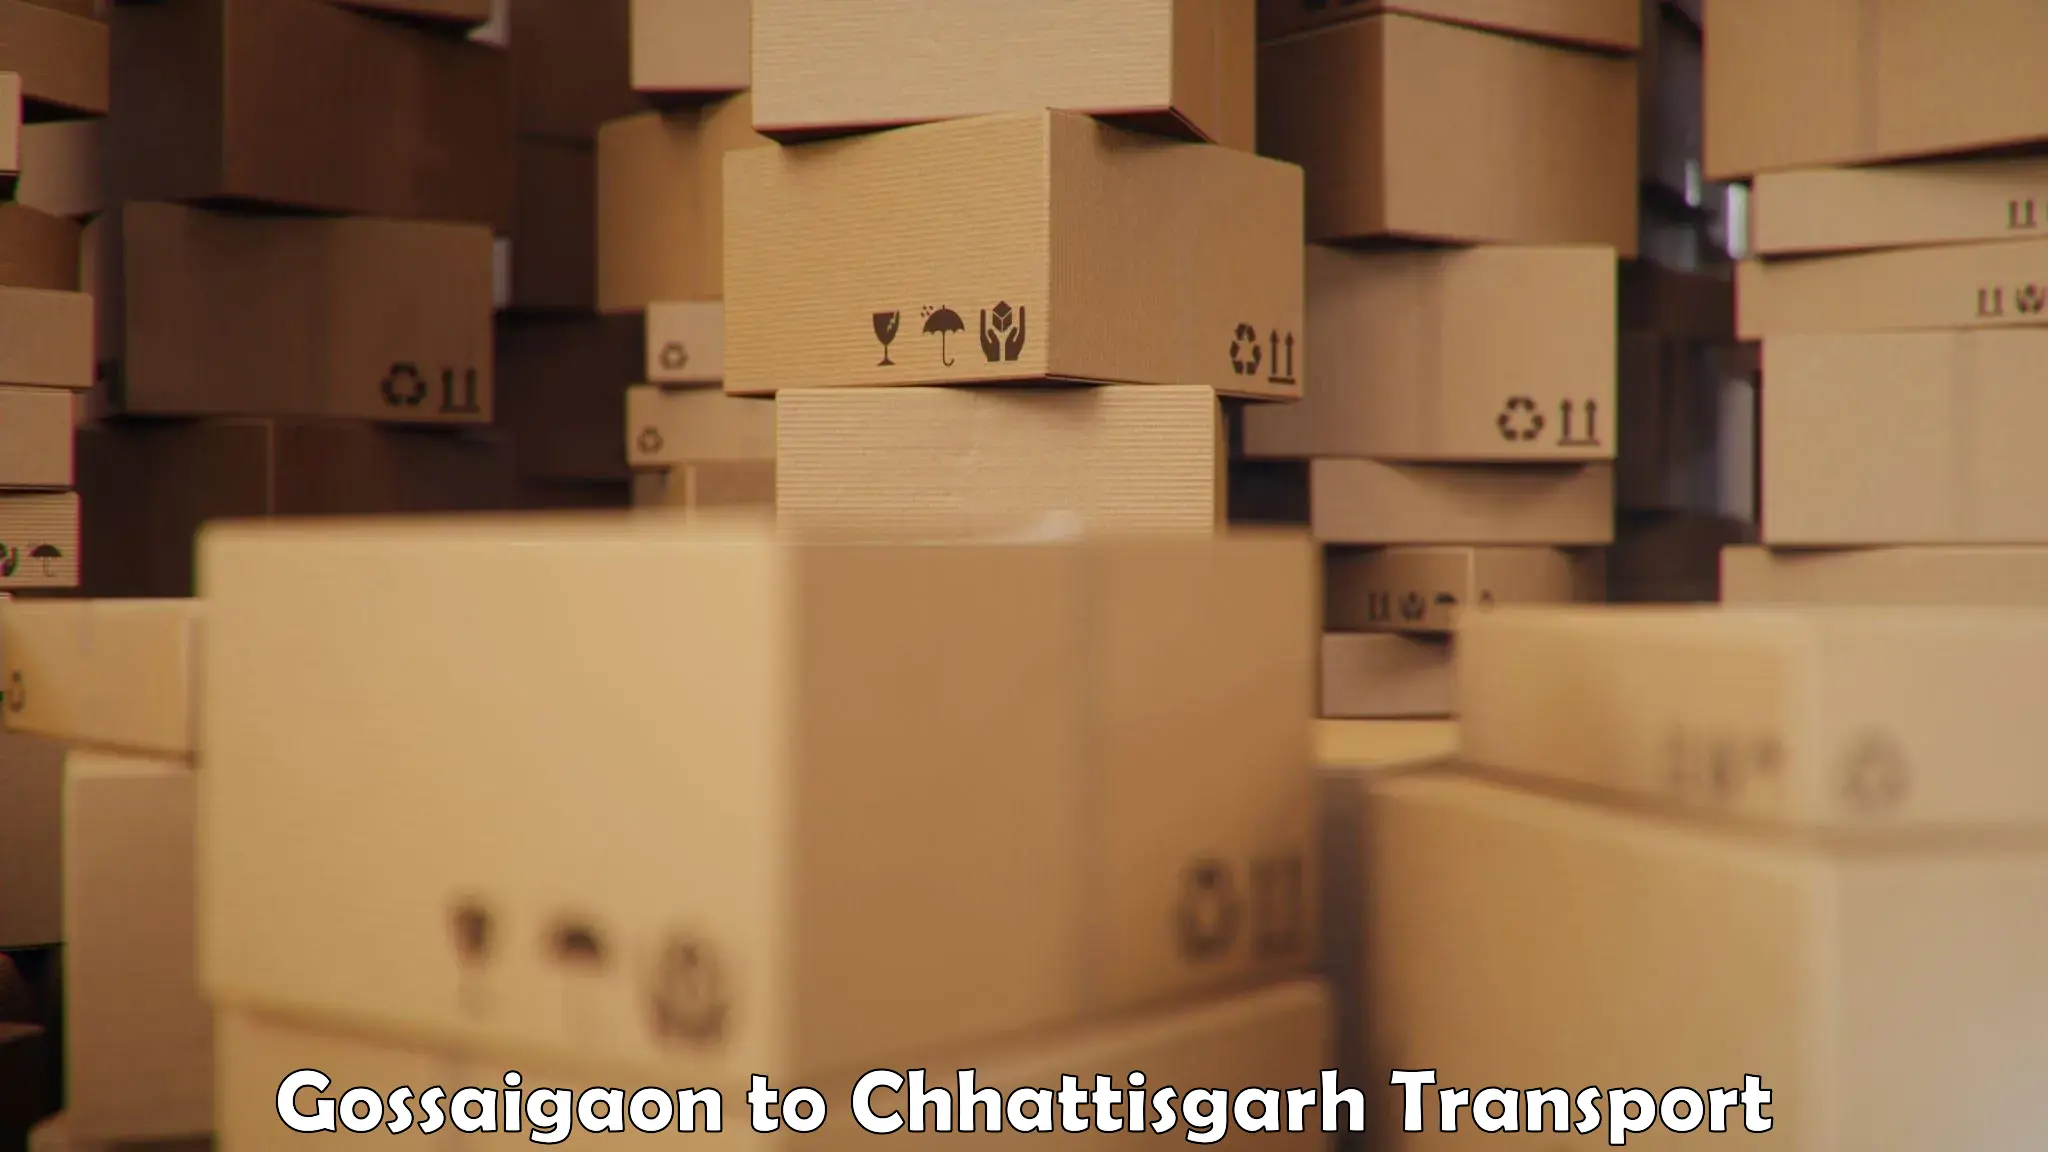 Truck transport companies in India Gossaigaon to Raigarh